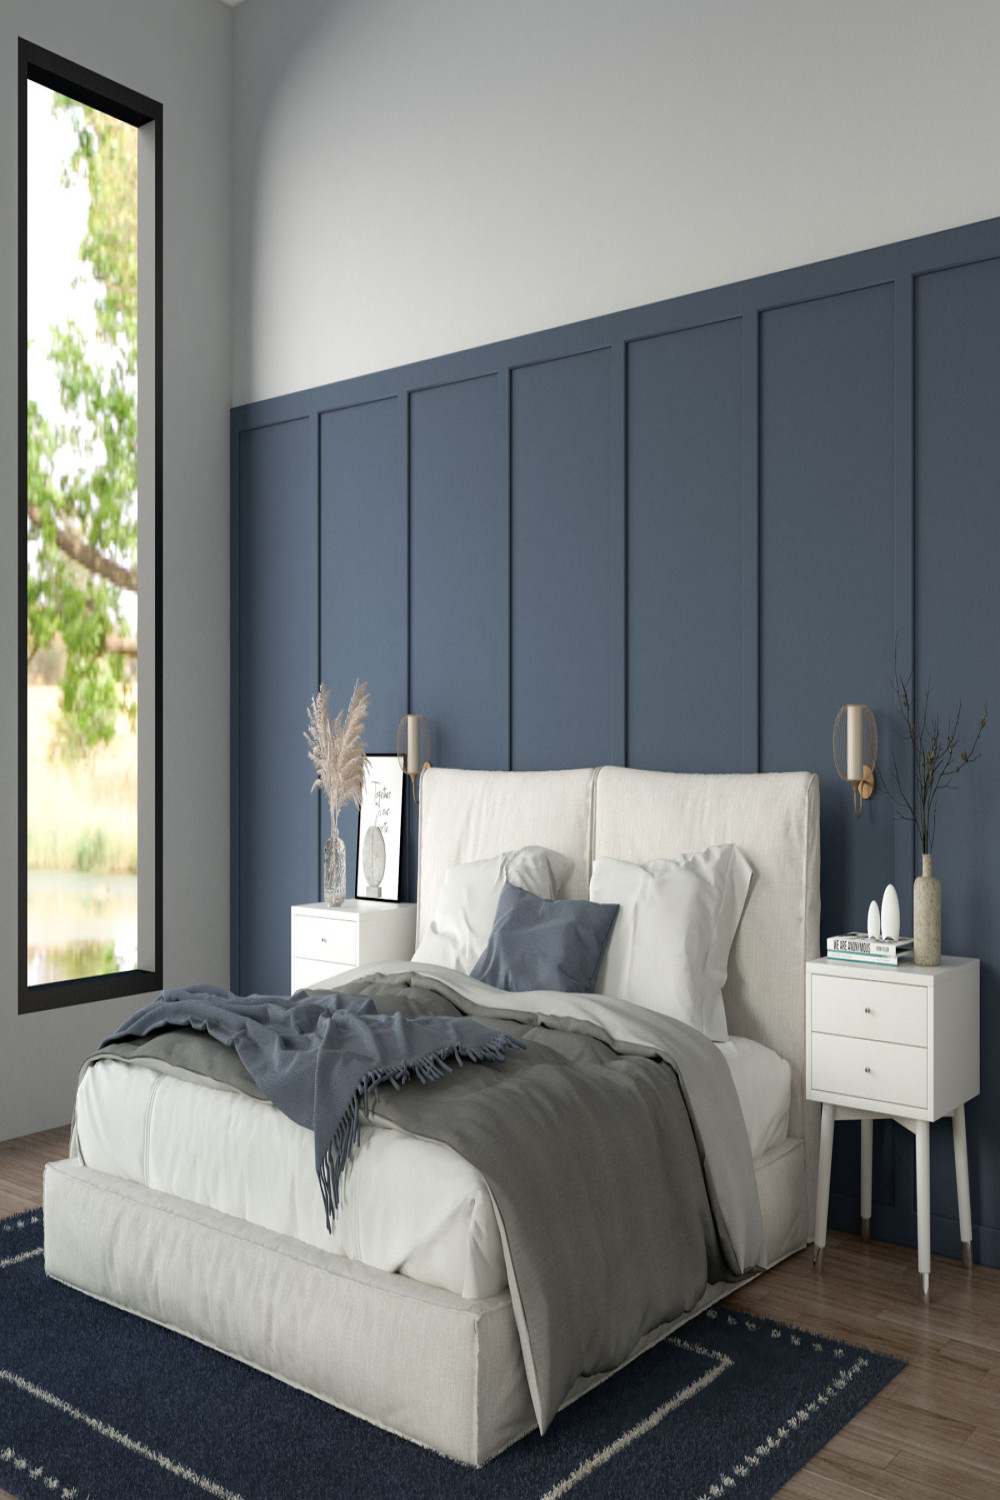 Stylish Bedroom Ideas With Blue Walls - roomdsign